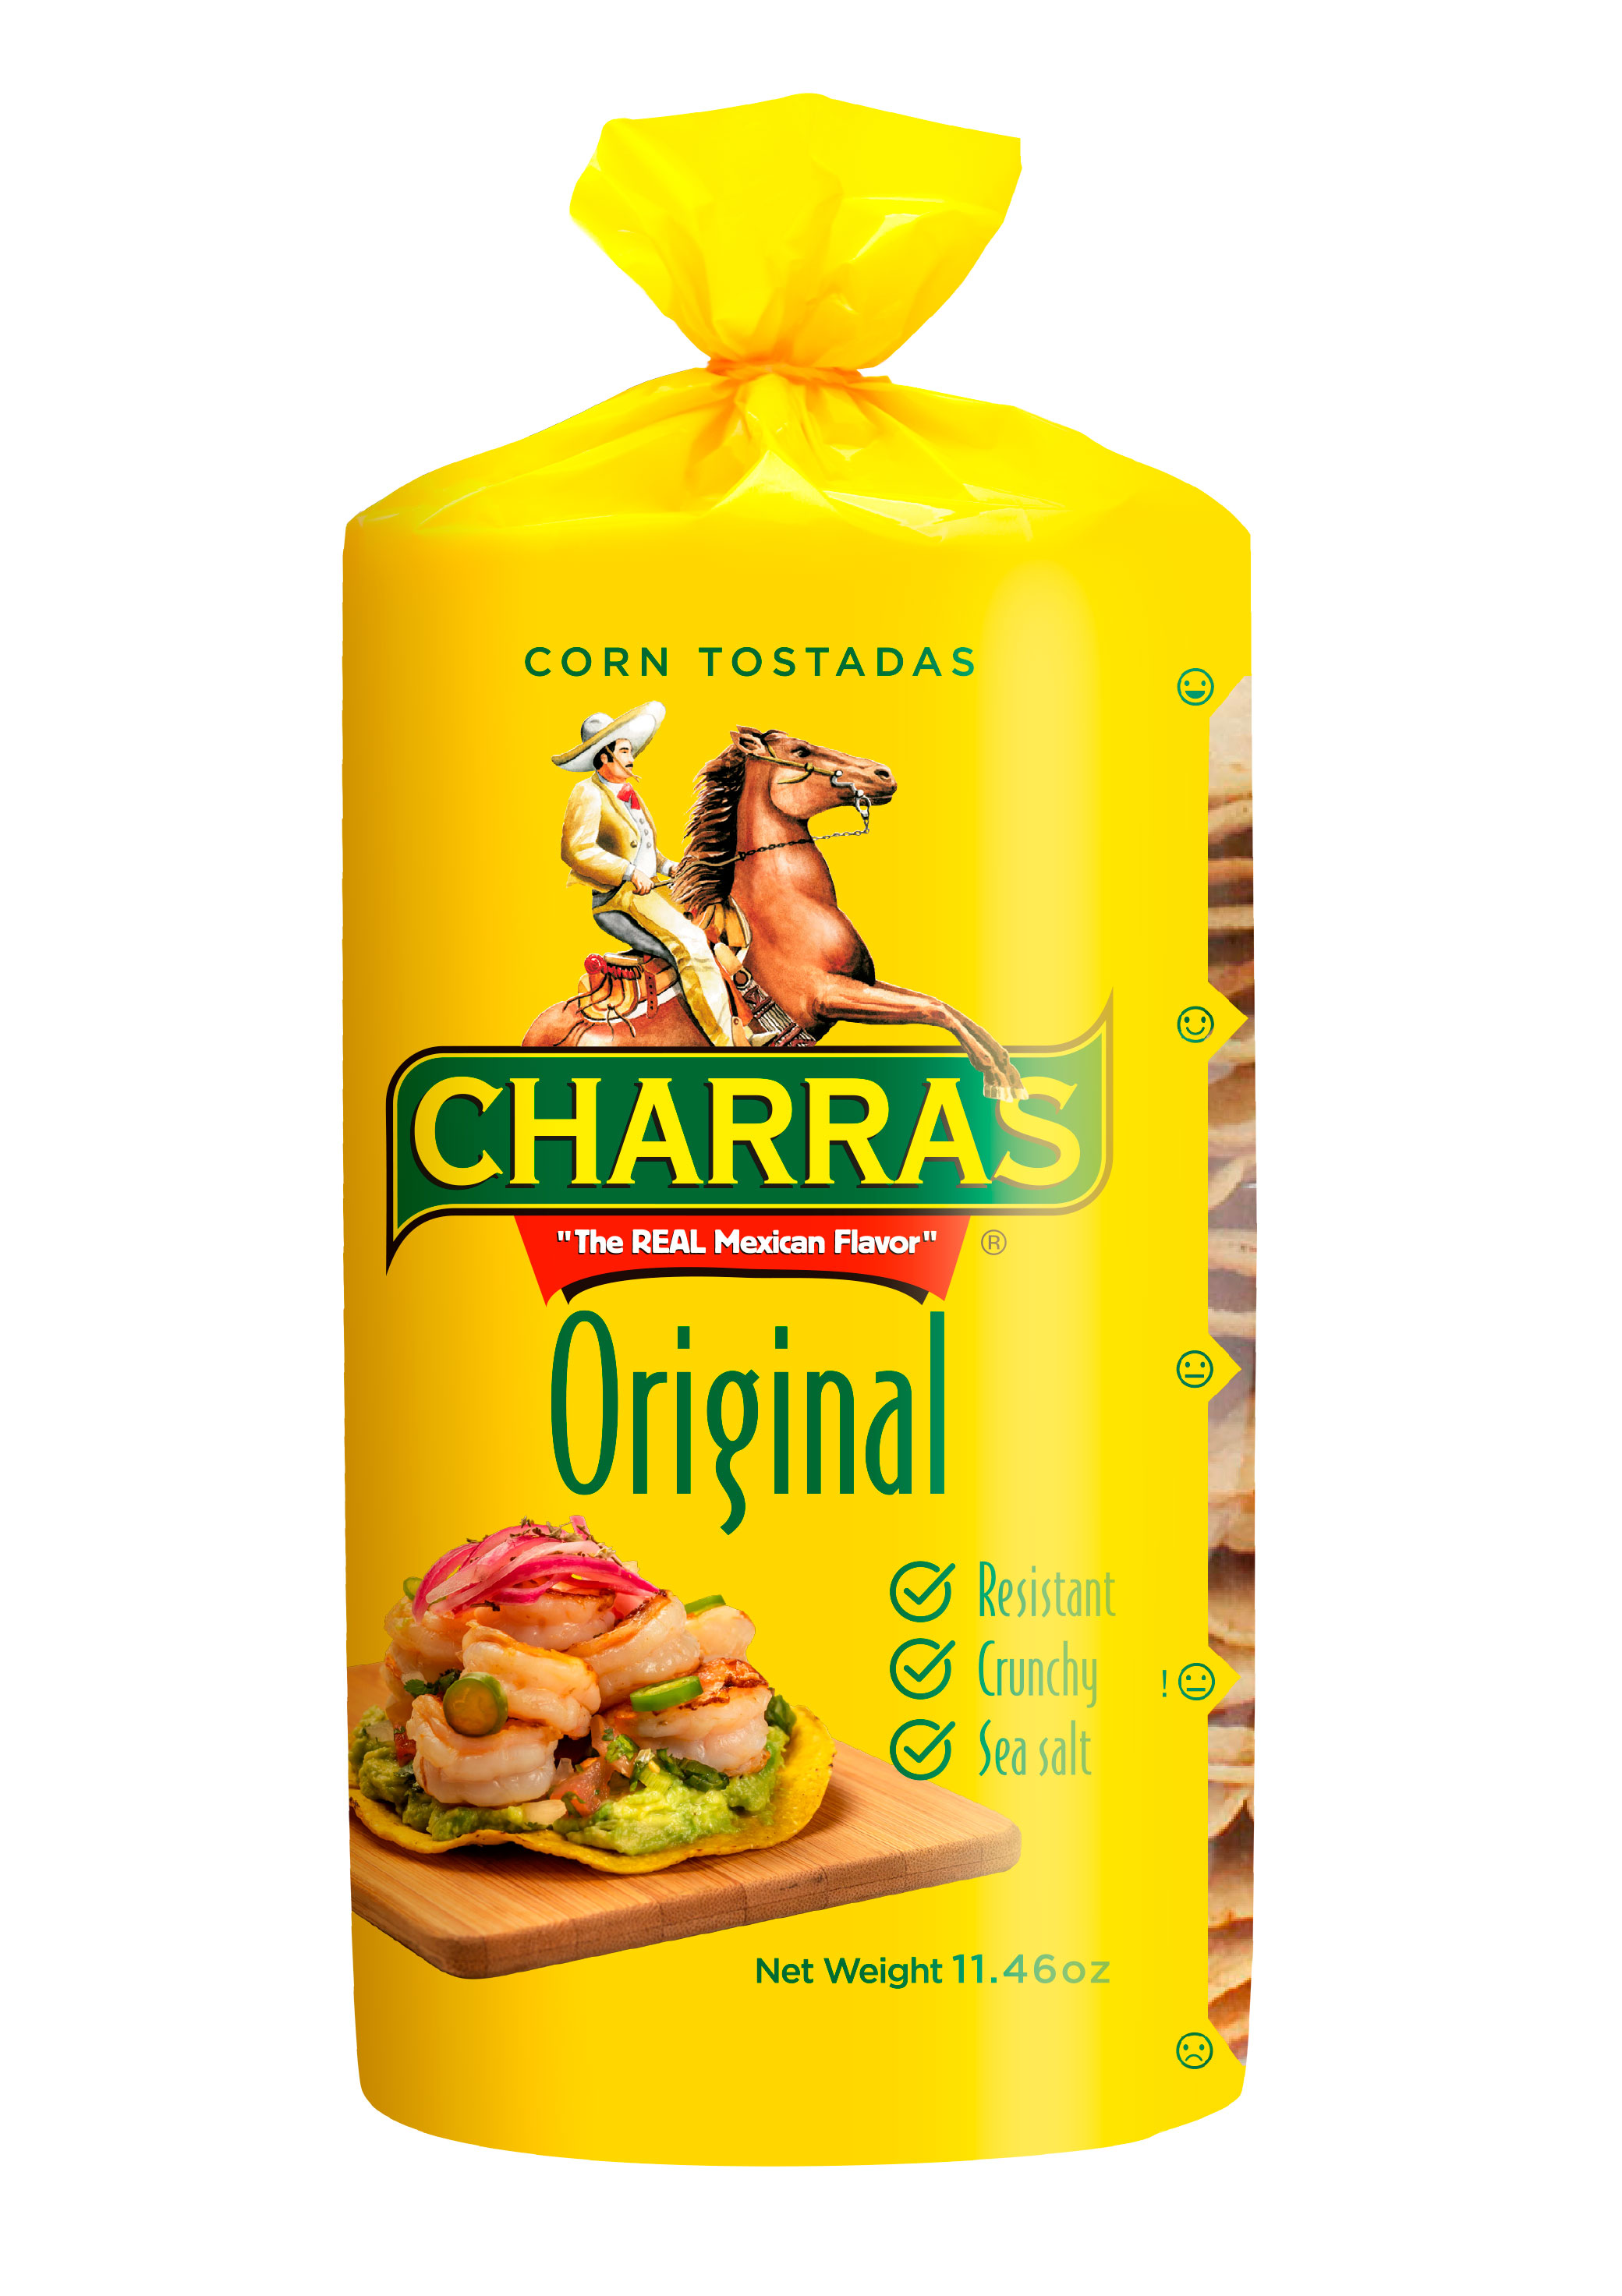 Charras Original Corn Tostadas Amarilla, Gluten-Free Yellow, 11.46oz - image 1 of 5